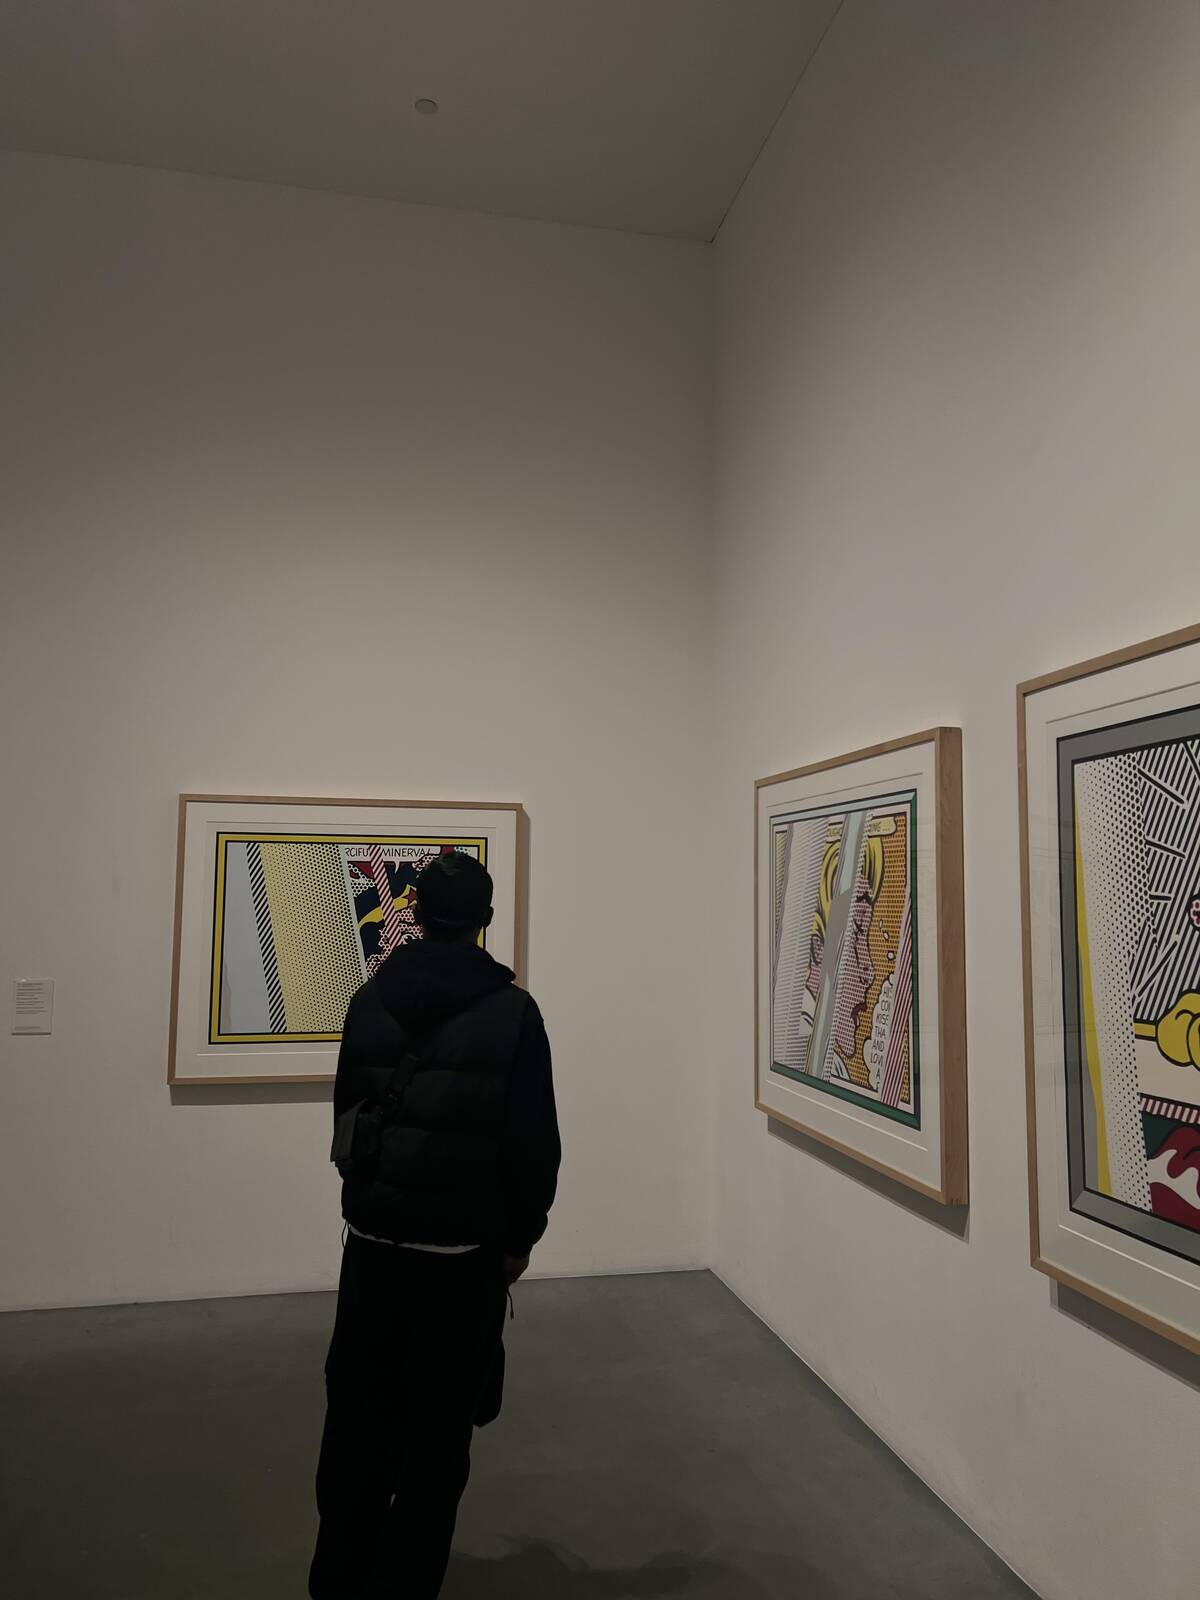 Image of Tate Modern by Emilija Kungyte